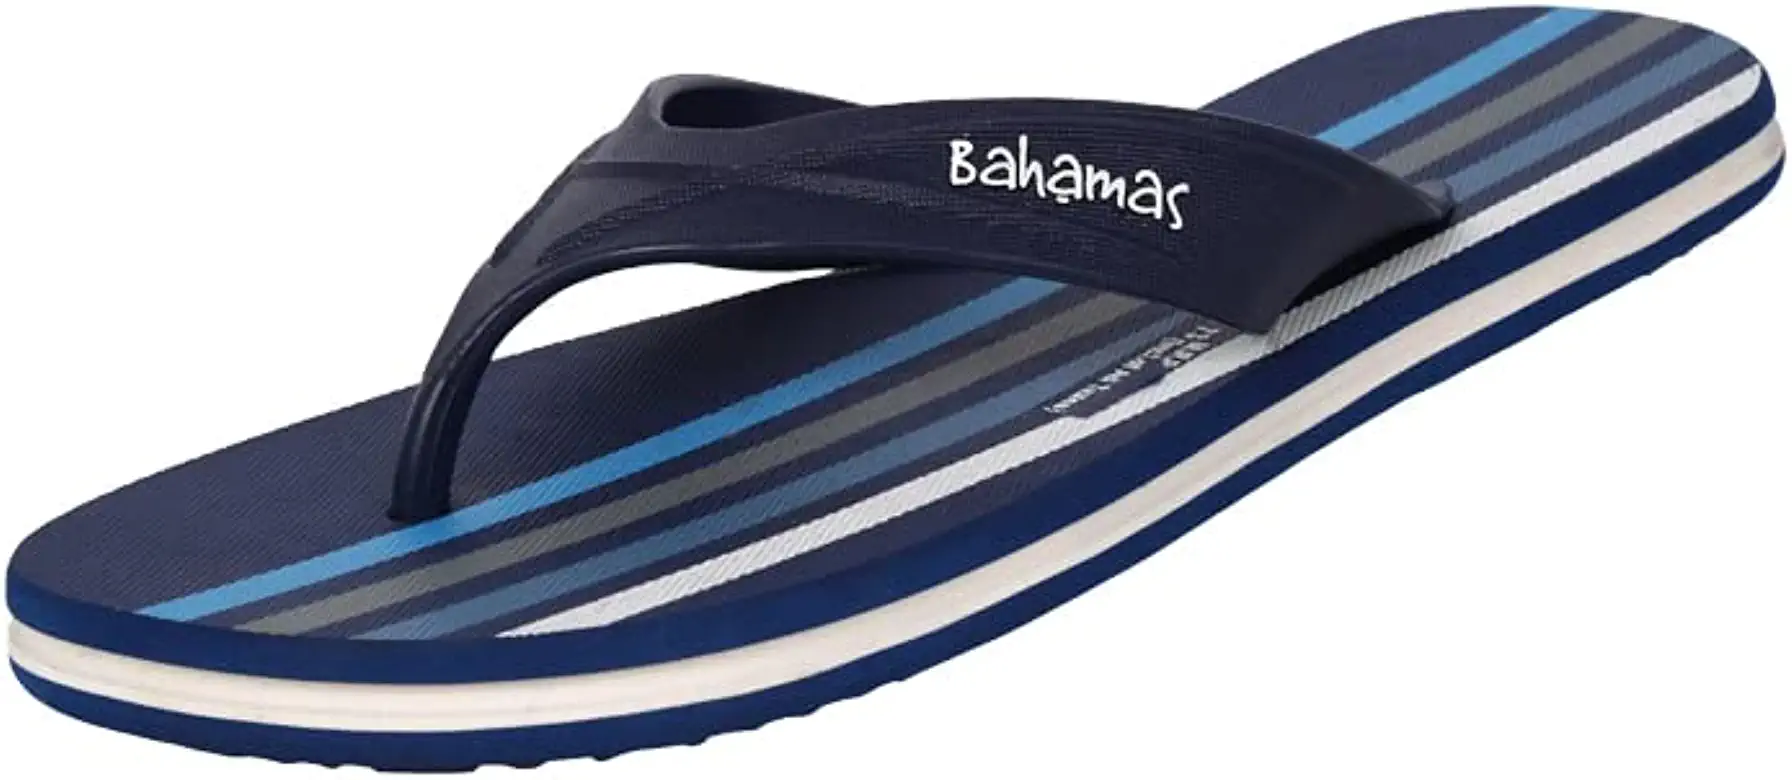 Bhamhas men's slippers